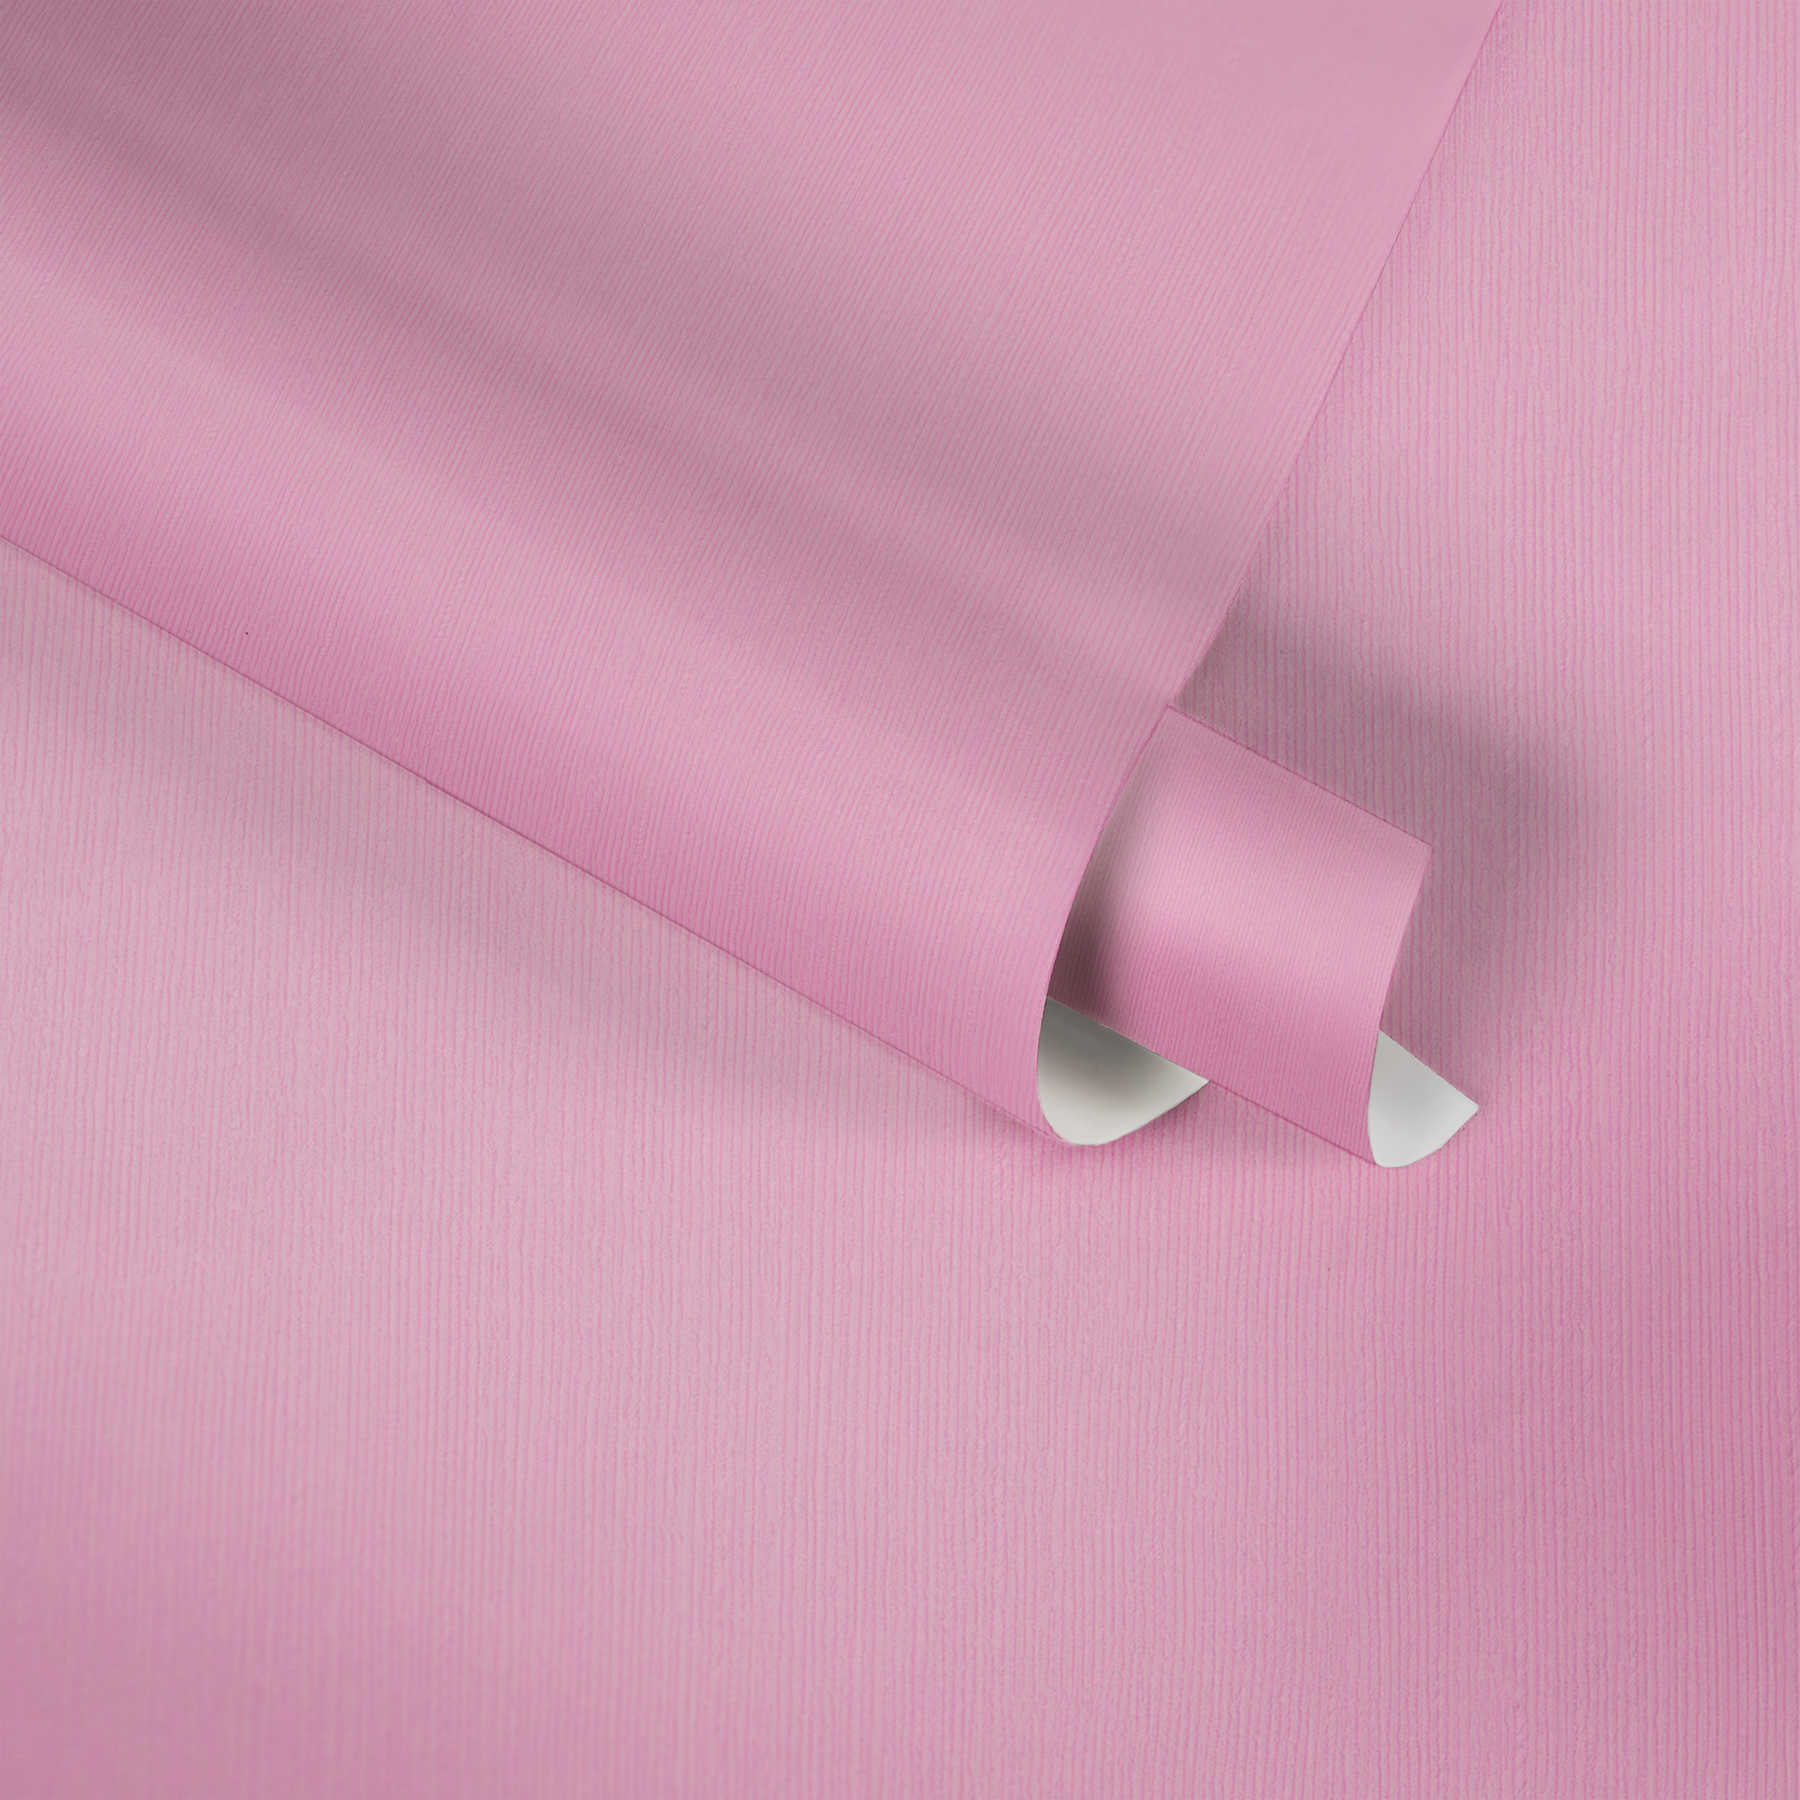             Rosa Papiertapete einfarbig mit Prägestruktur – Rosa
        